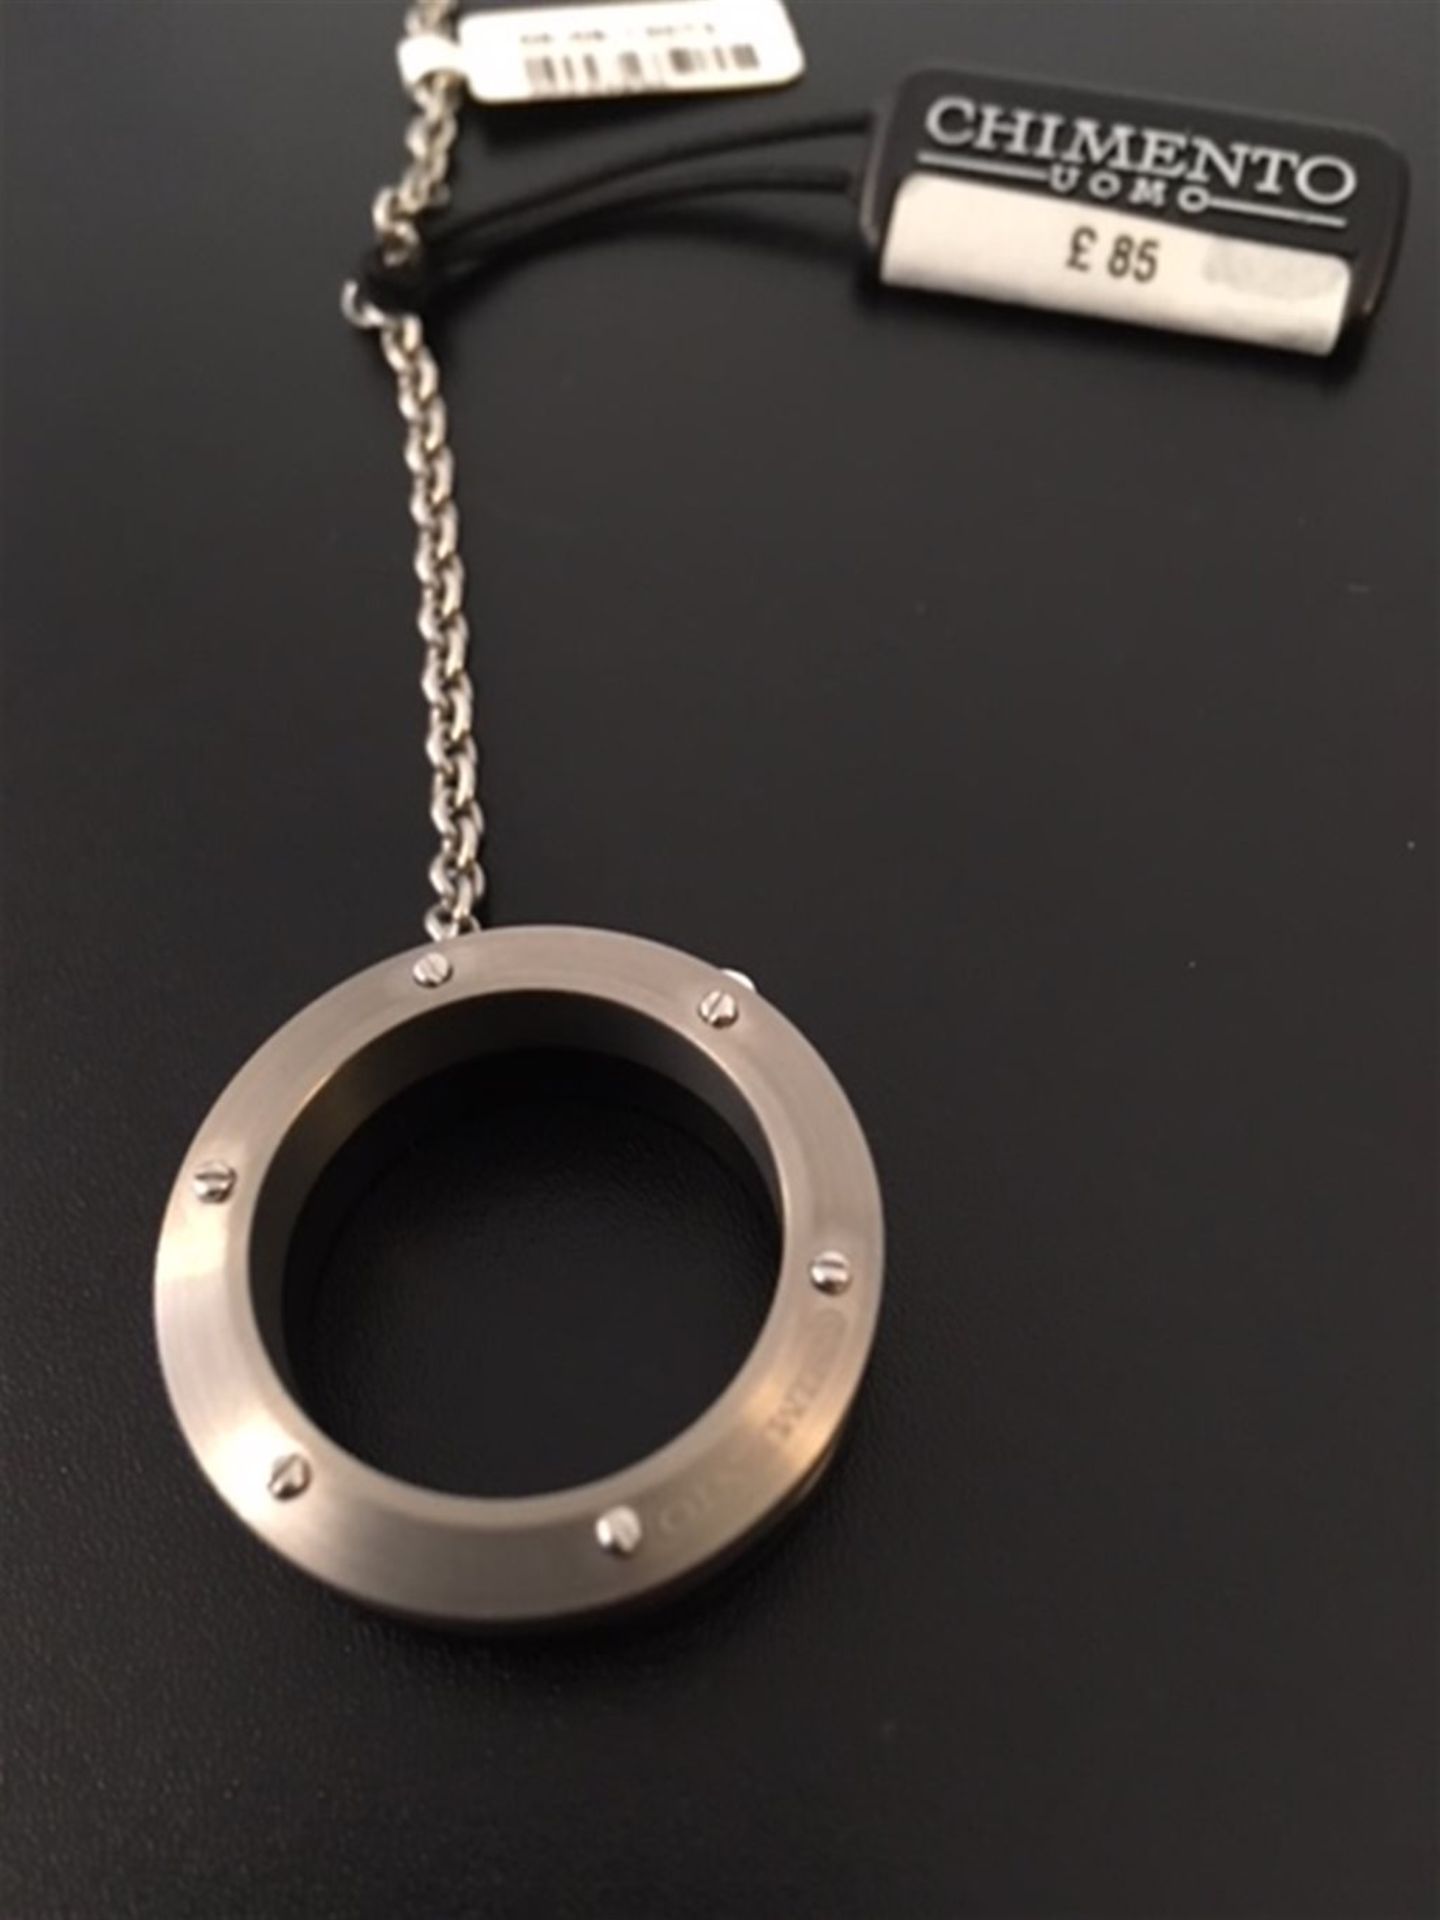 Chimento key ring - Image 2 of 2